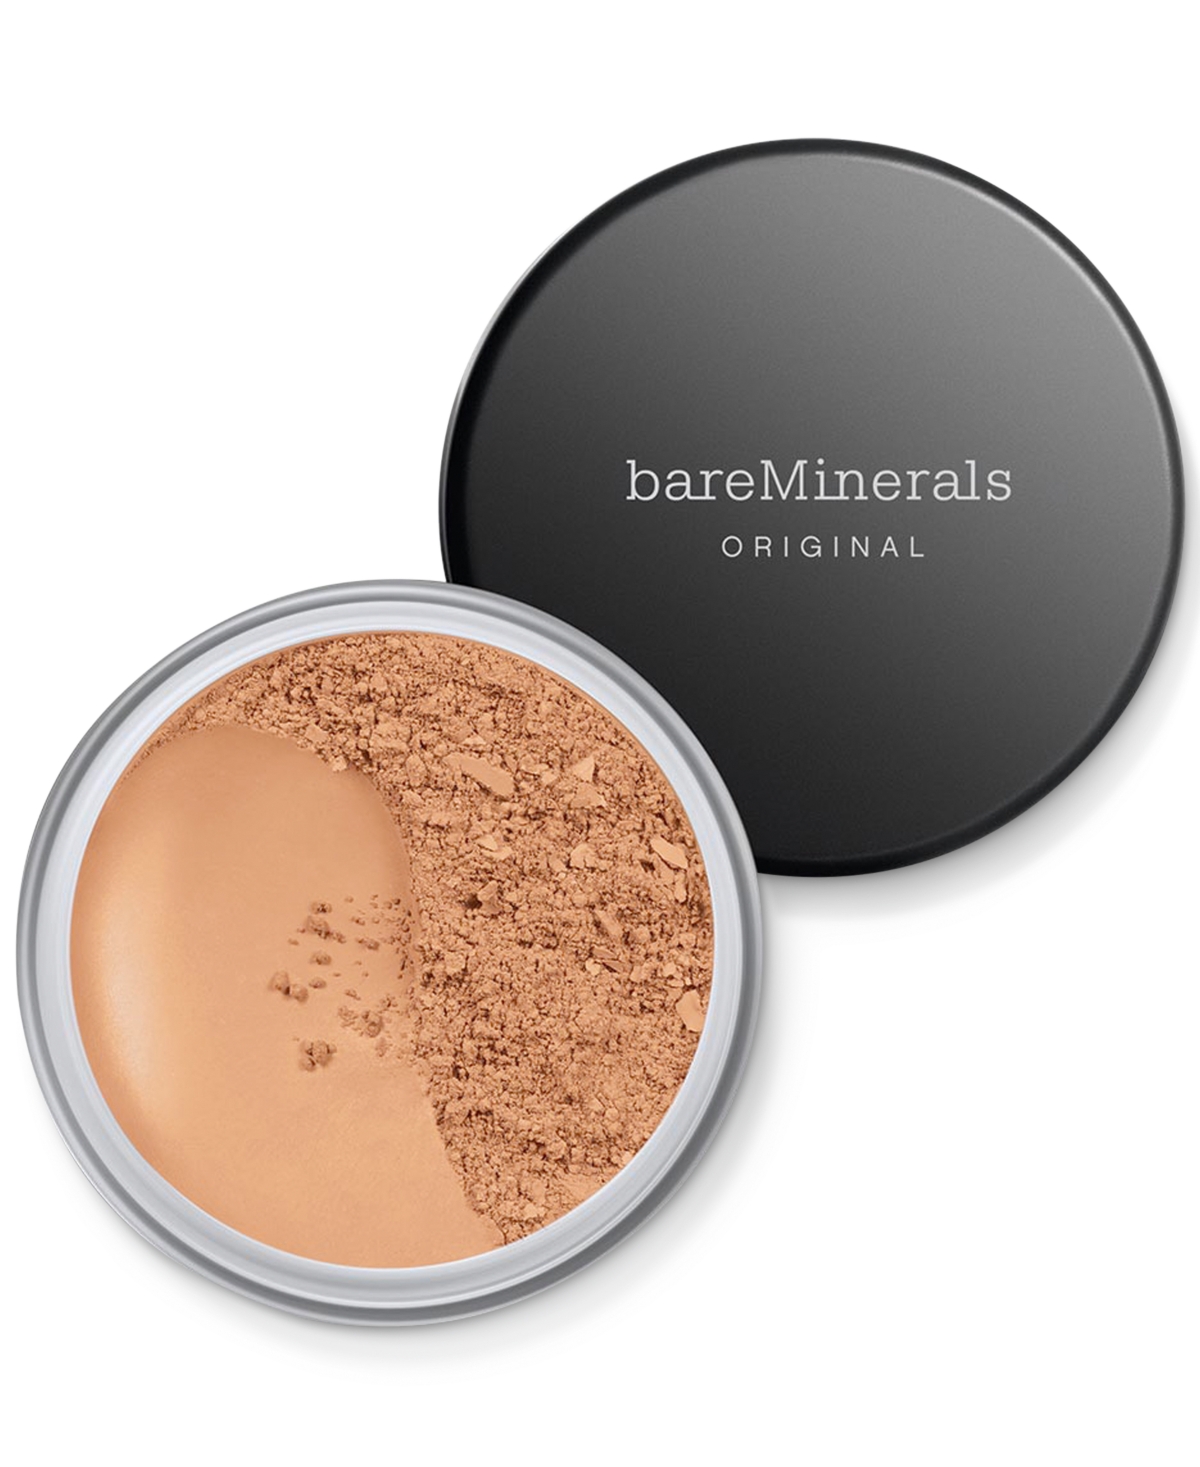 Bareminerals Original Loose Powder Foundation Spf 15 In Neutral Medium  - For Medium Skin With N